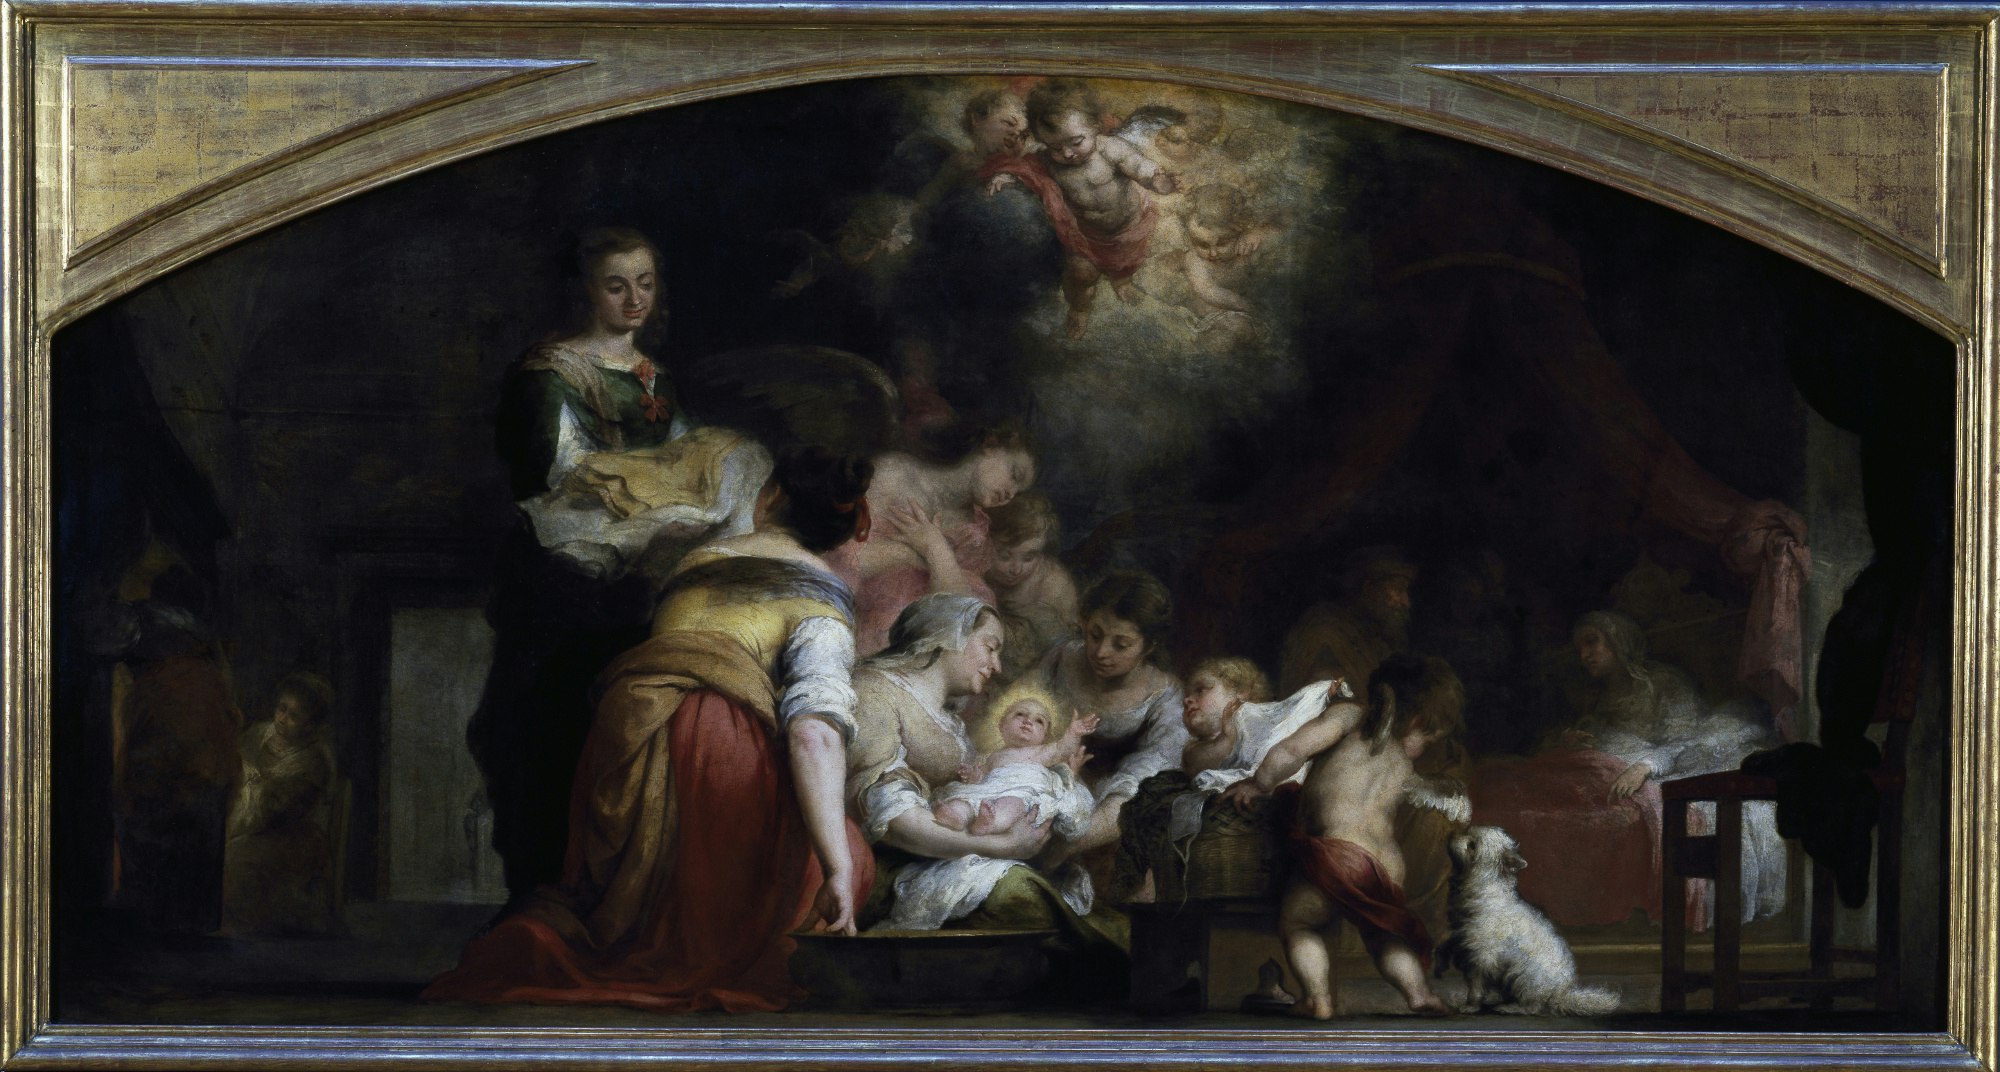 Seville celebrates birth of Baroque artist